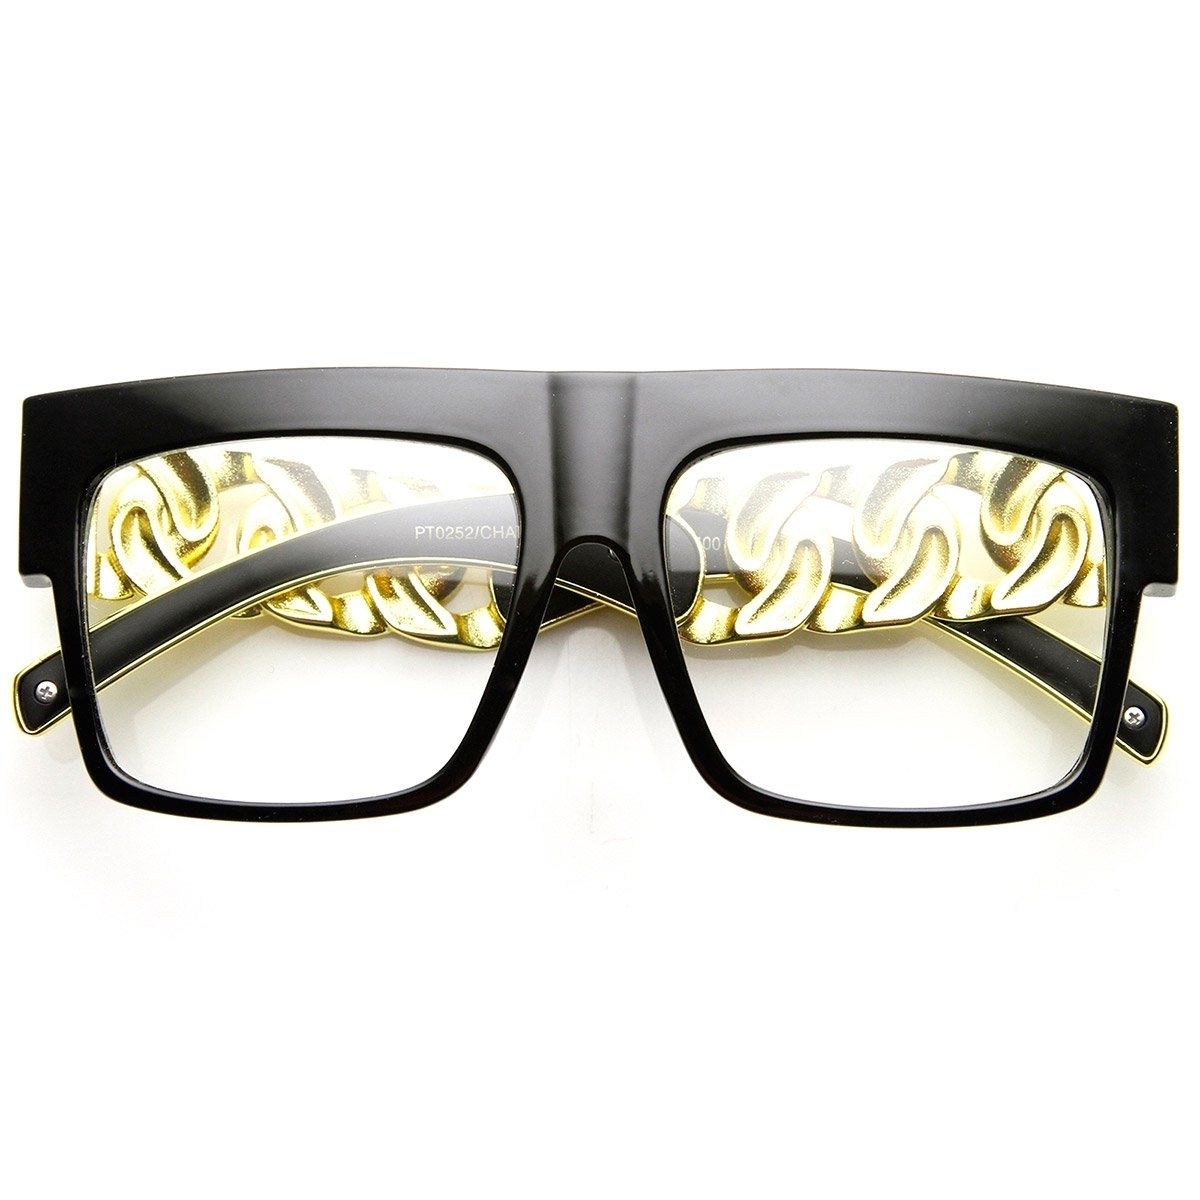 High Fashion Metal Chain Arm Clear Lens Flat Top Aviator Glasses - Tortoise Gold